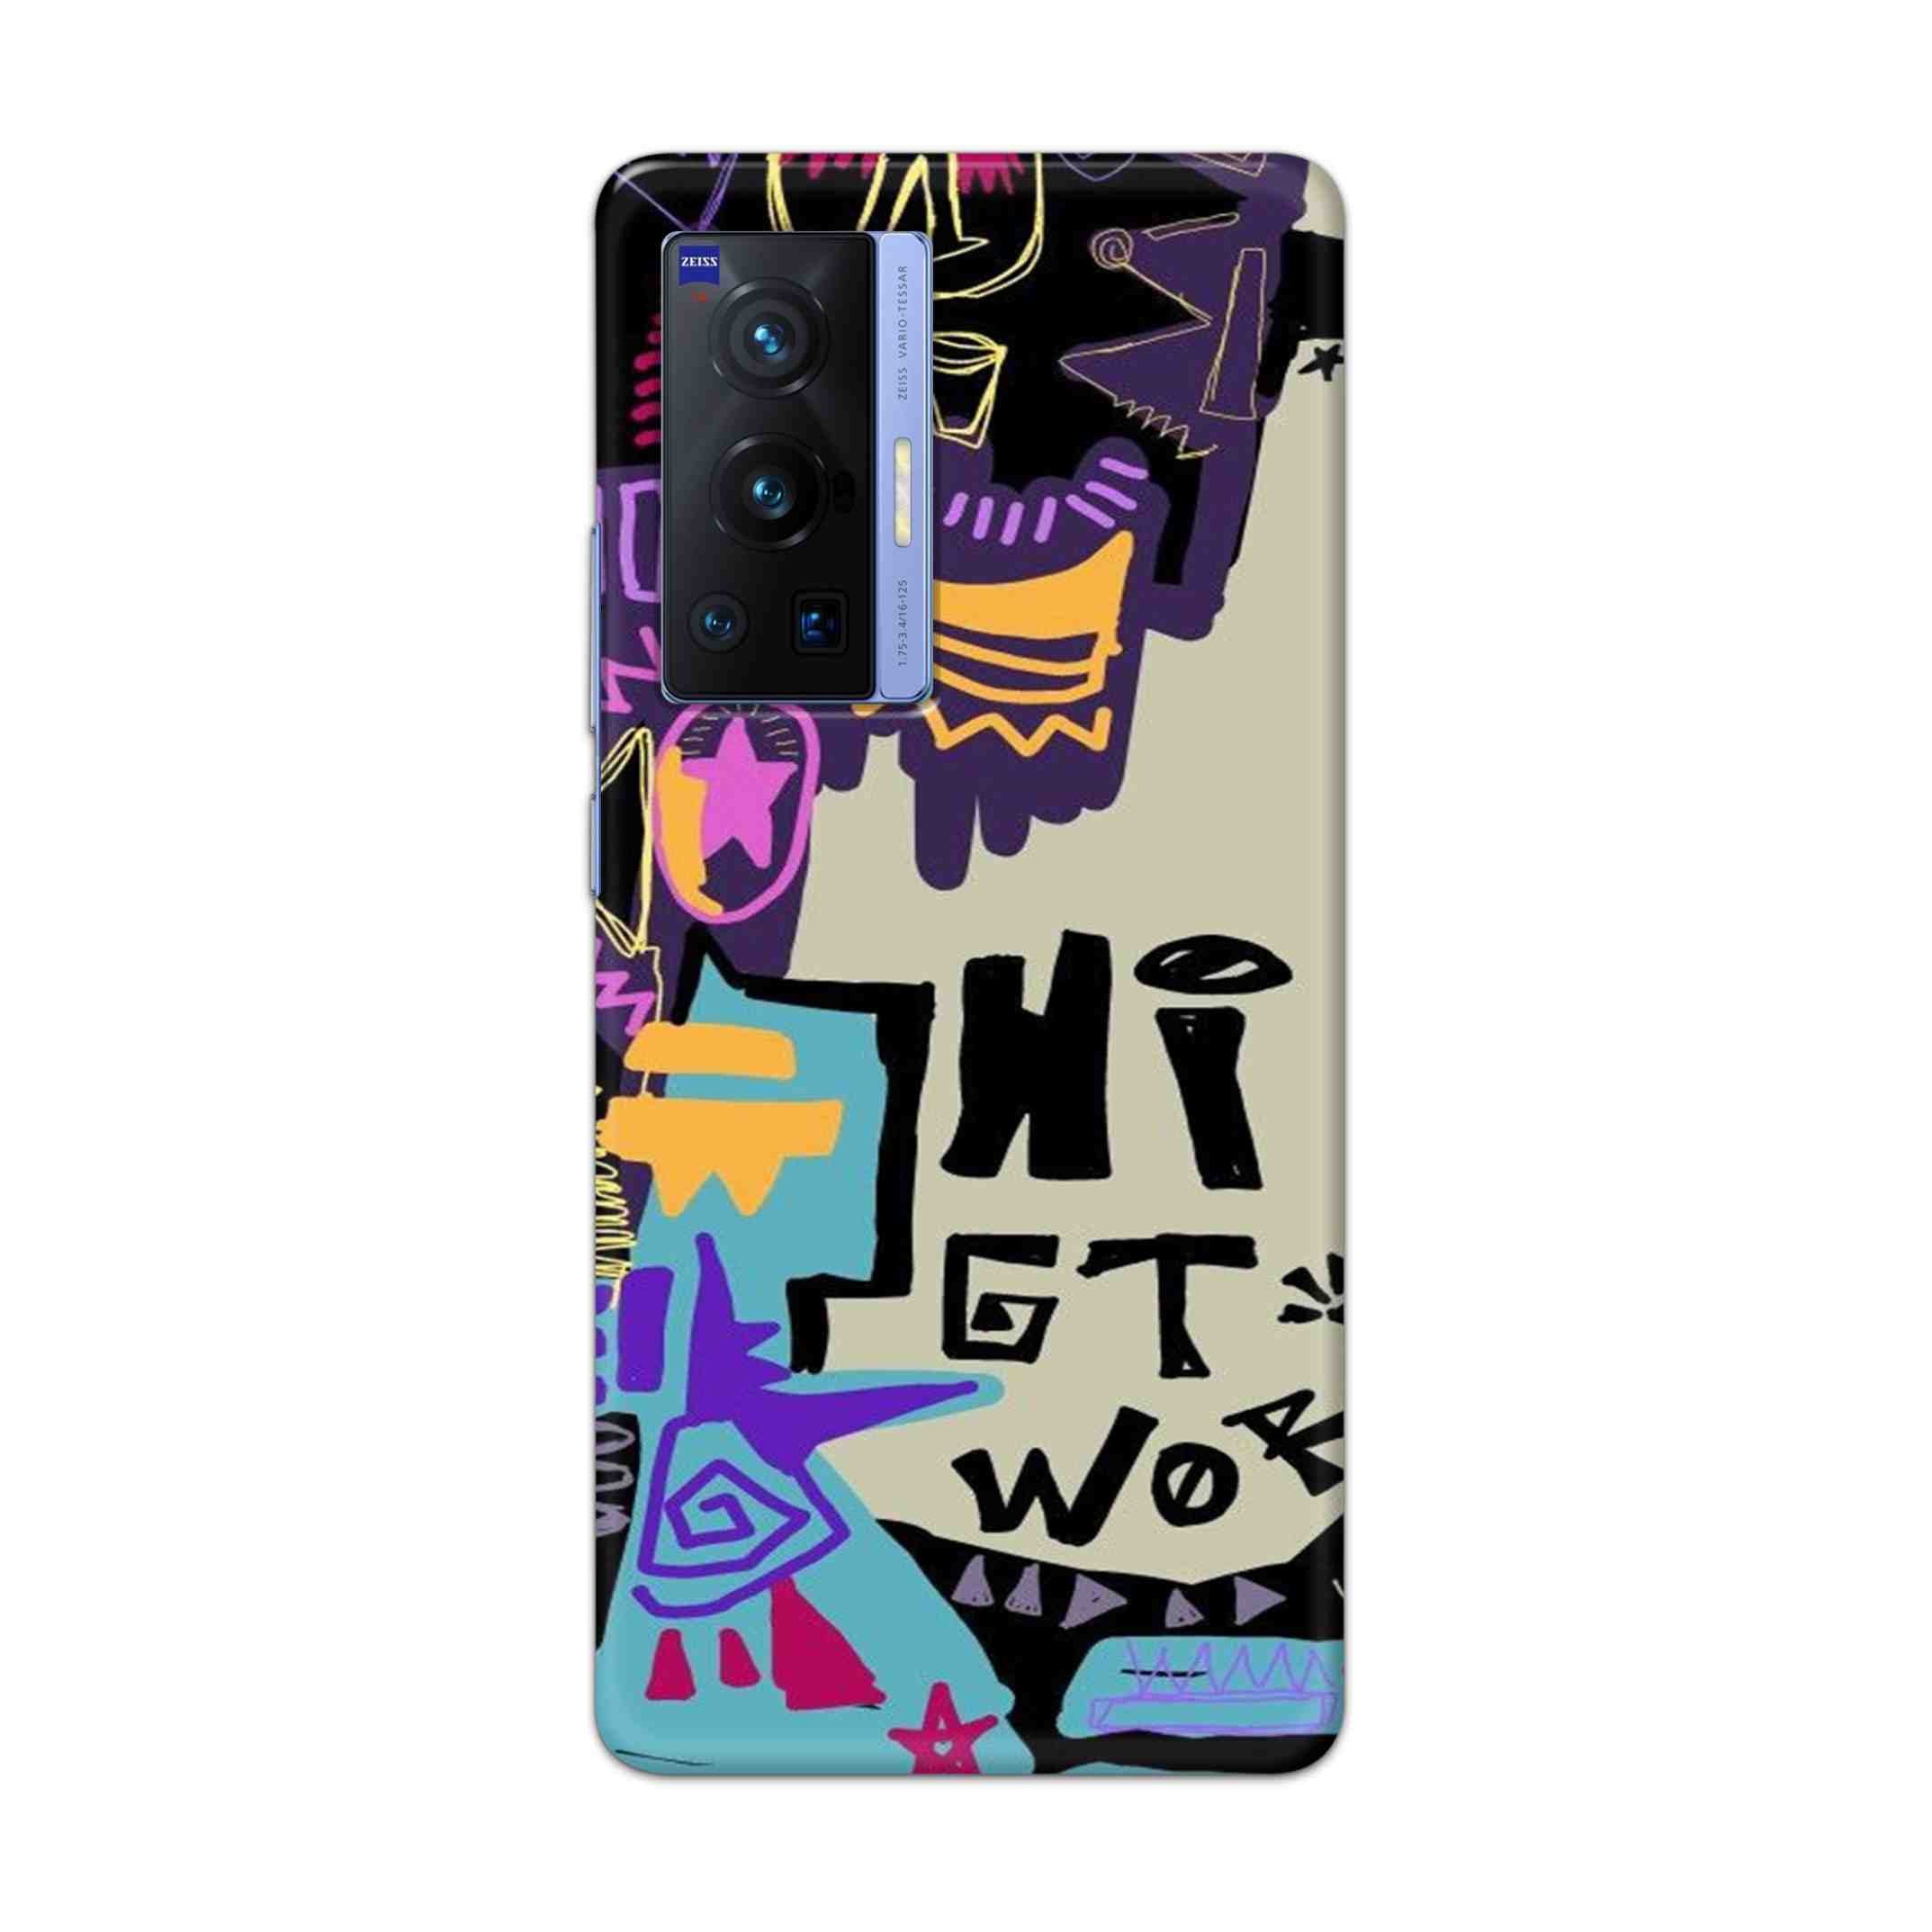 Buy Hi Gt World Hard Back Mobile Phone Case Cover For Vivo X70 Pro Online